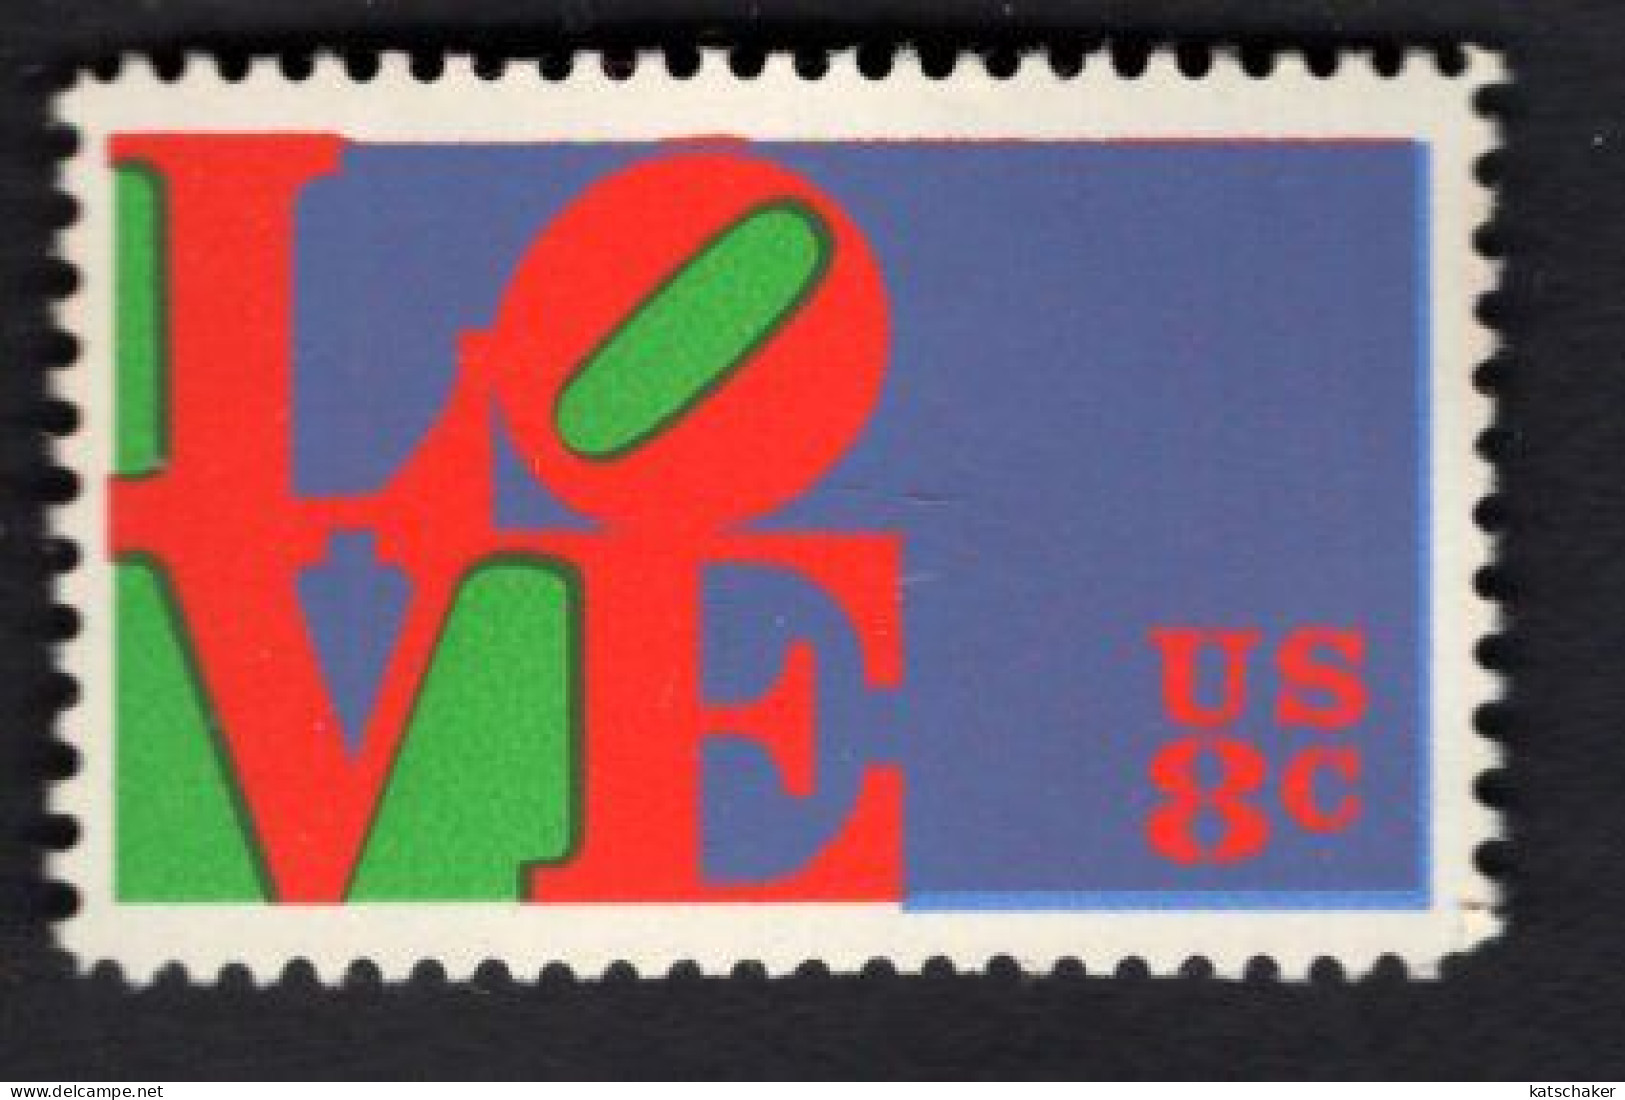 204513573 1972 SCOTT 1475 (XX) POSTFRIS MINT NEVER HINGED - LOVE ISSUE BY ROBERT INDIANA - Neufs